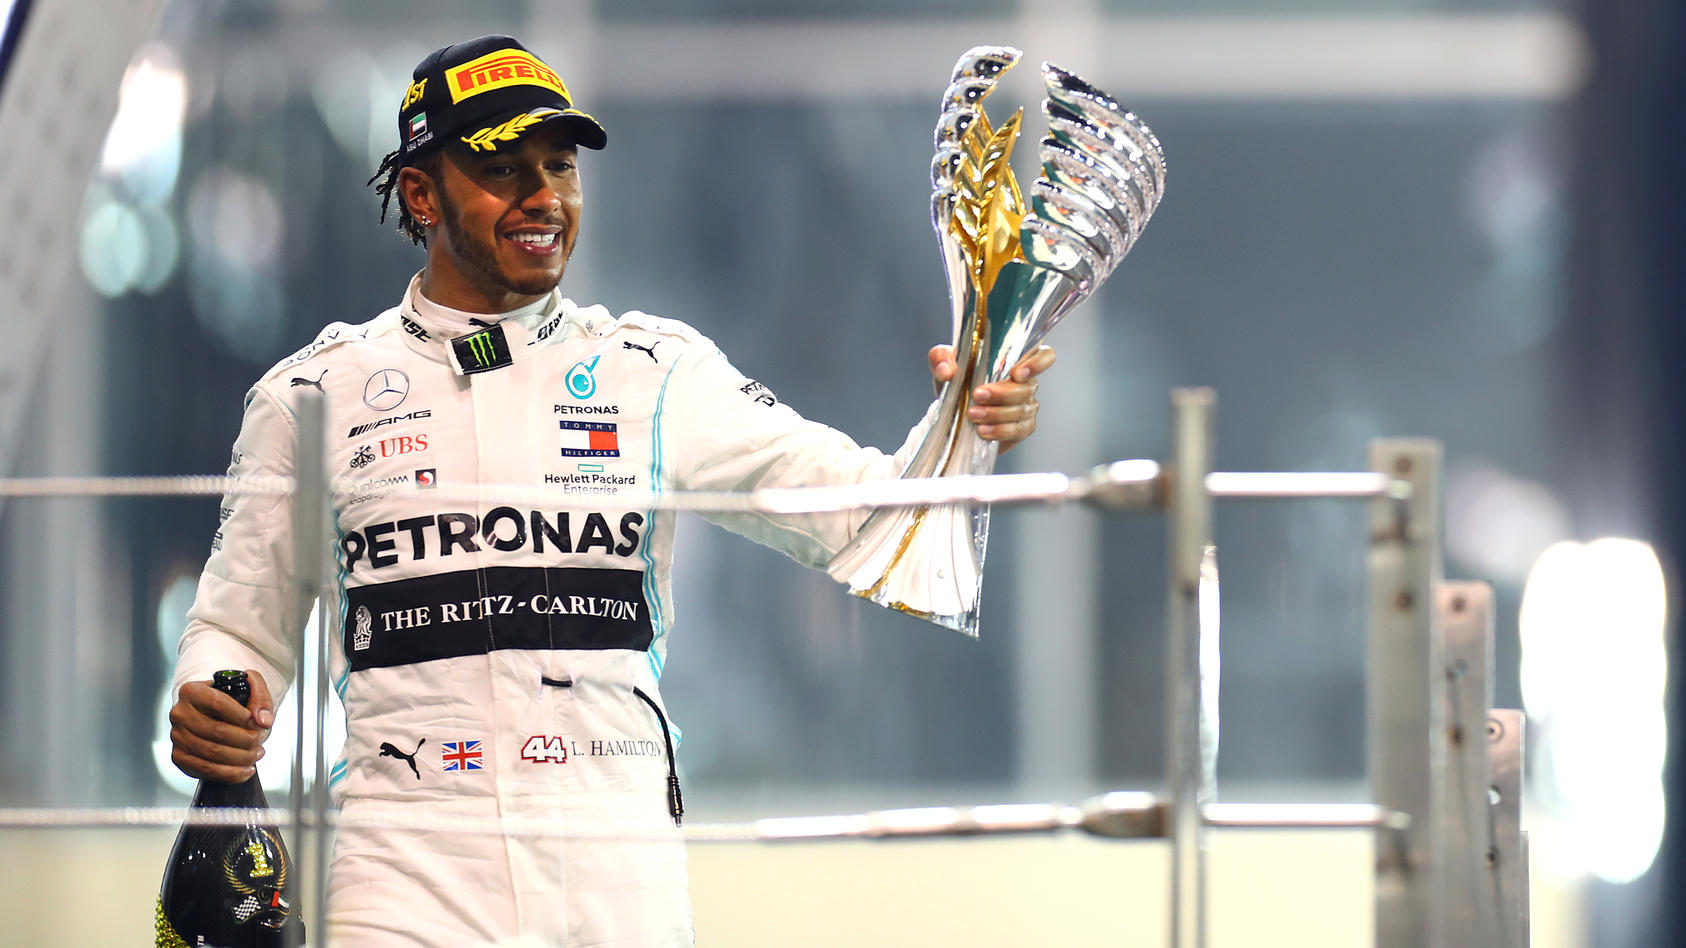 ABU DHABI, UNITED ARAB EMIRATES - DECEMBER 01: Race winner Lewis Hamilton of Great Britain and Mercedes GP celebrates on the podium during the F1 Grand Prix of Abu Dhabi at Yas Marina Circuit on December 01, 2019 in Abu Dhabi, United Arab Emirates. (